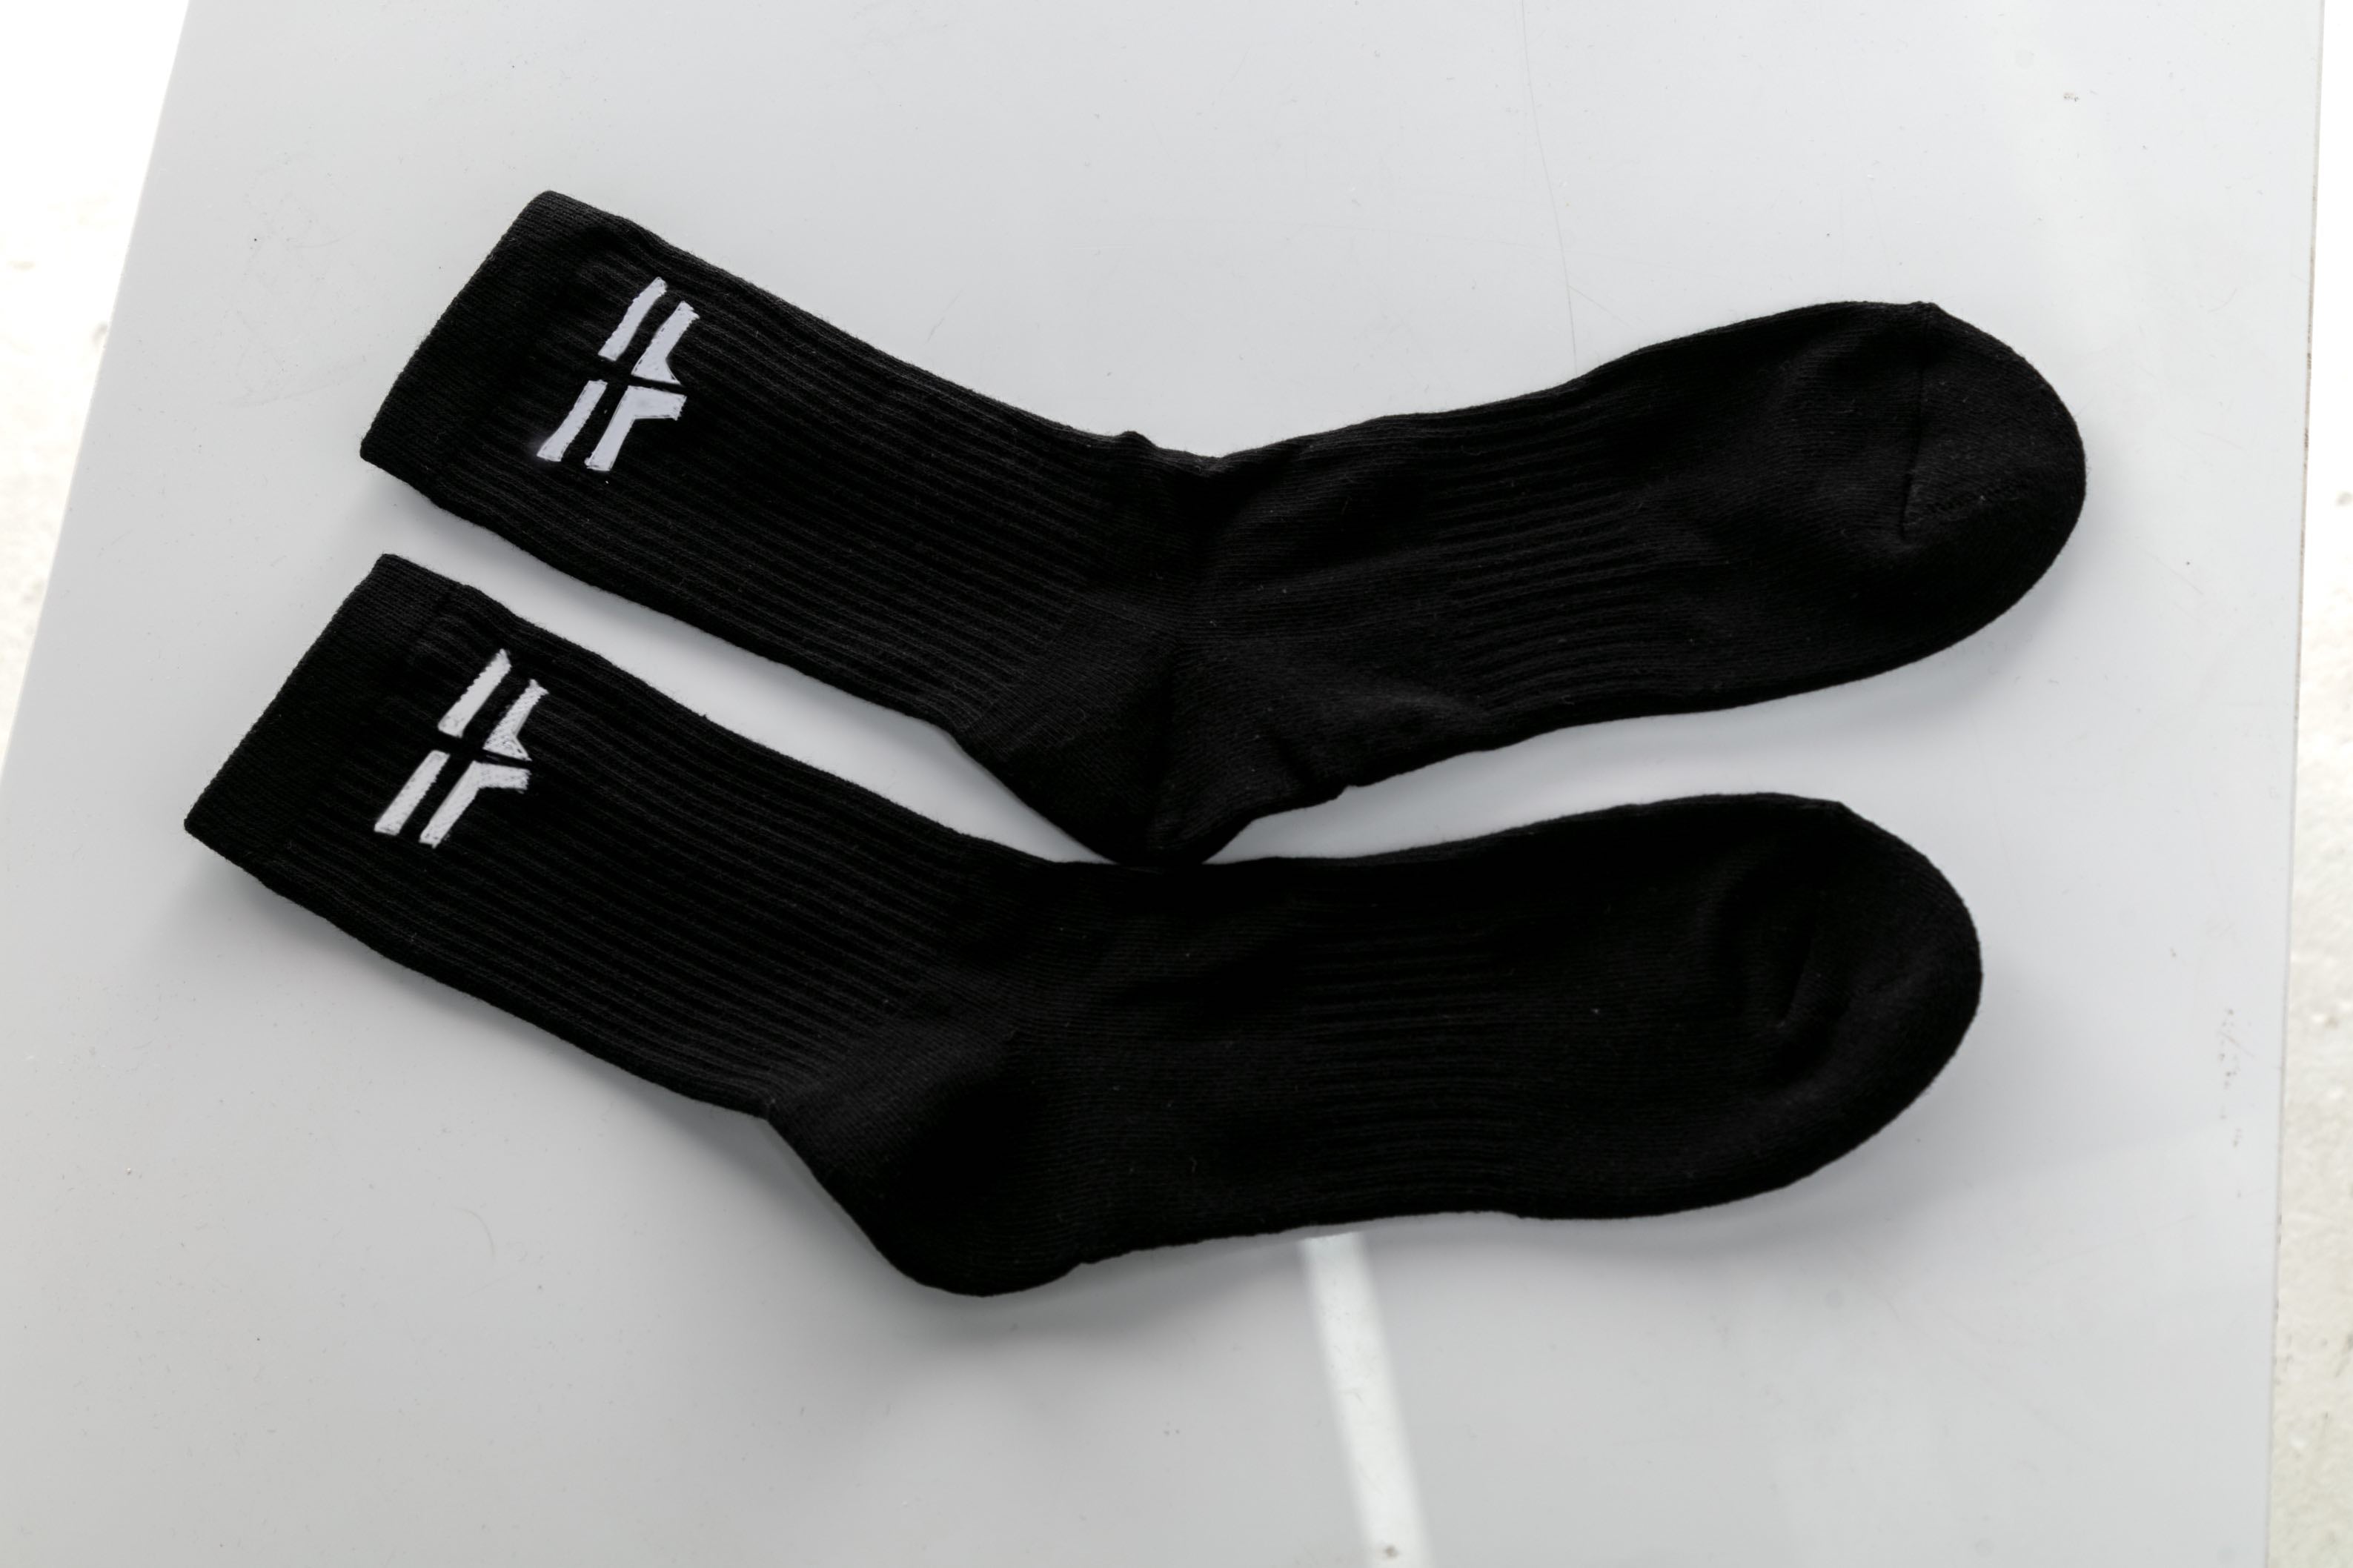 Copy of GymFreak Black socks